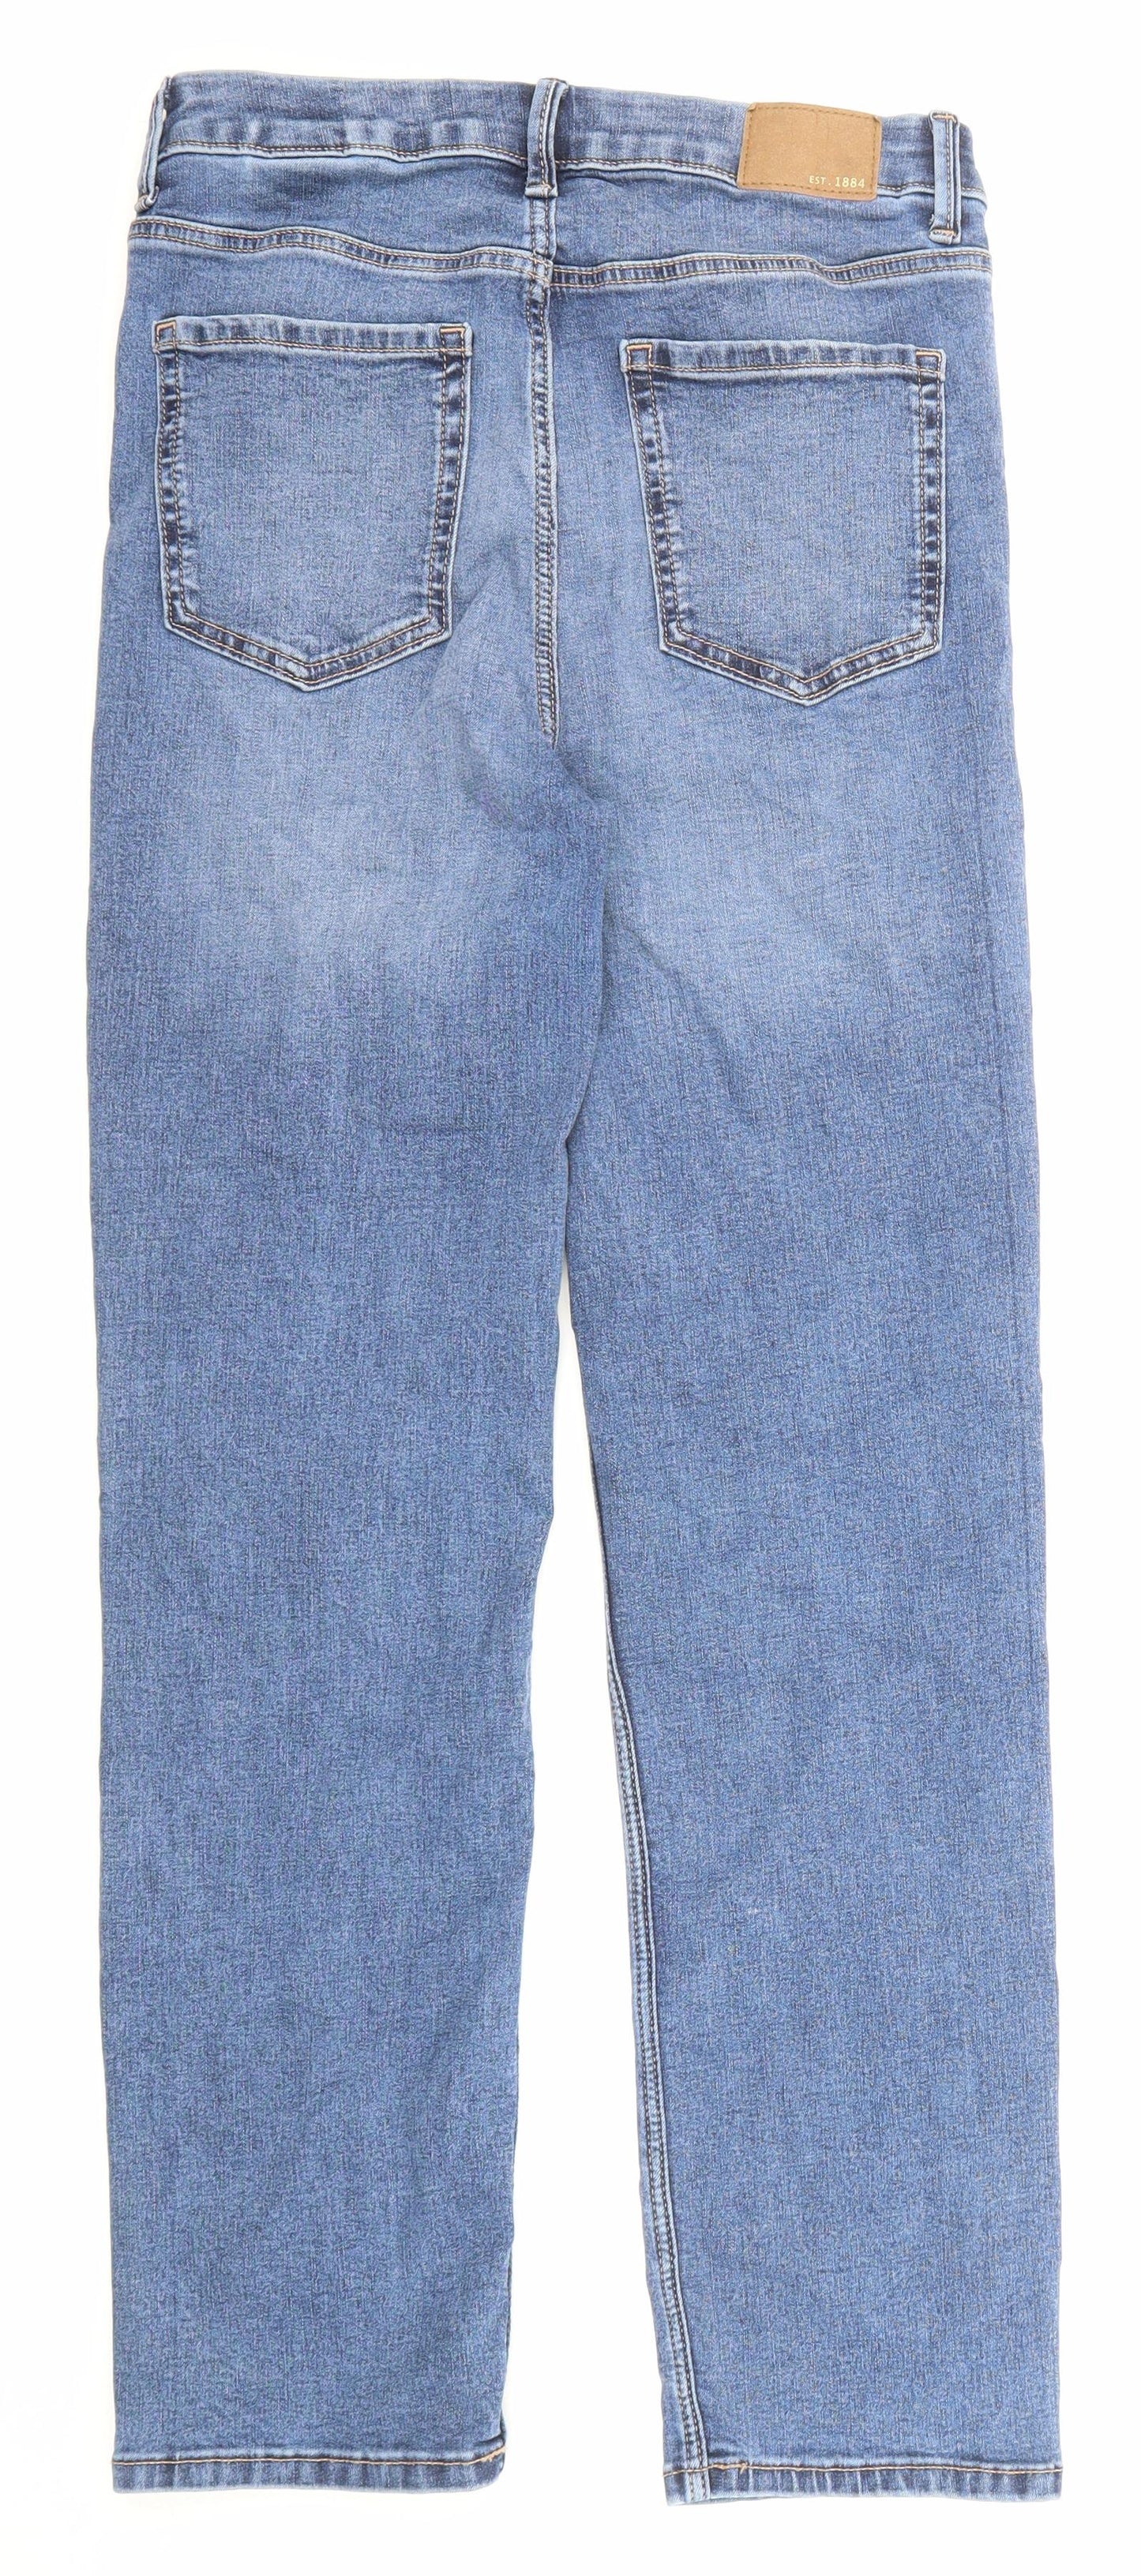 Marks and Spencer Womens Blue Cotton Straight Jeans Size 10 Regular Zip - Short Leg